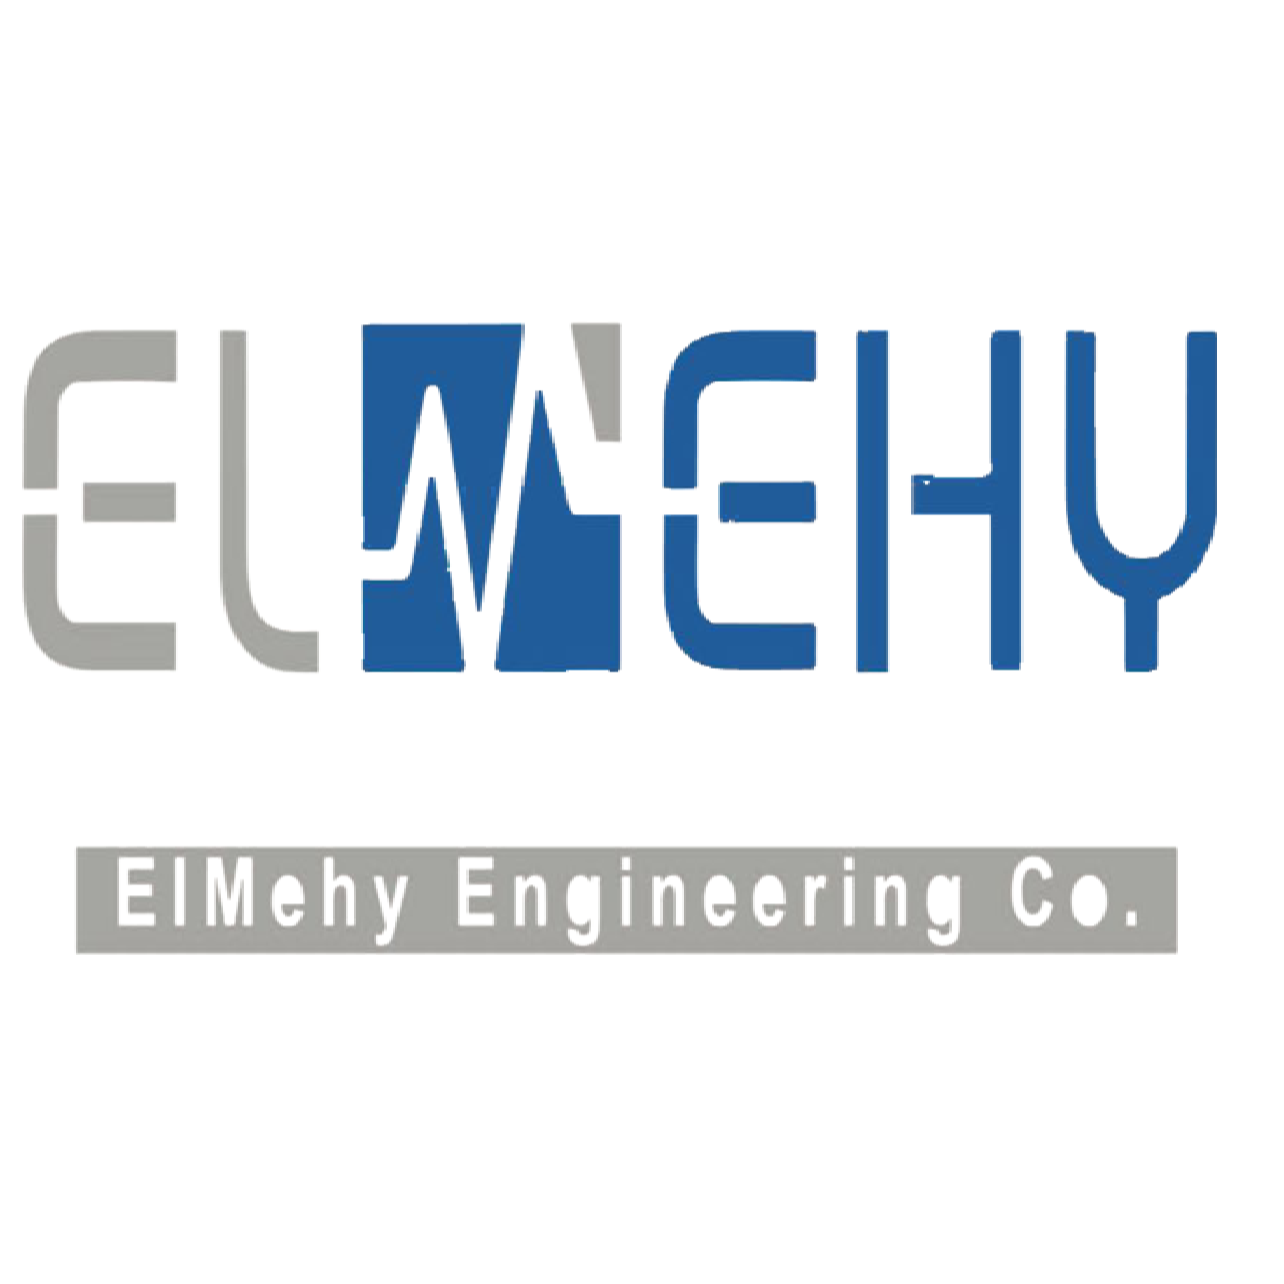 ElMehy Engineering Company‏